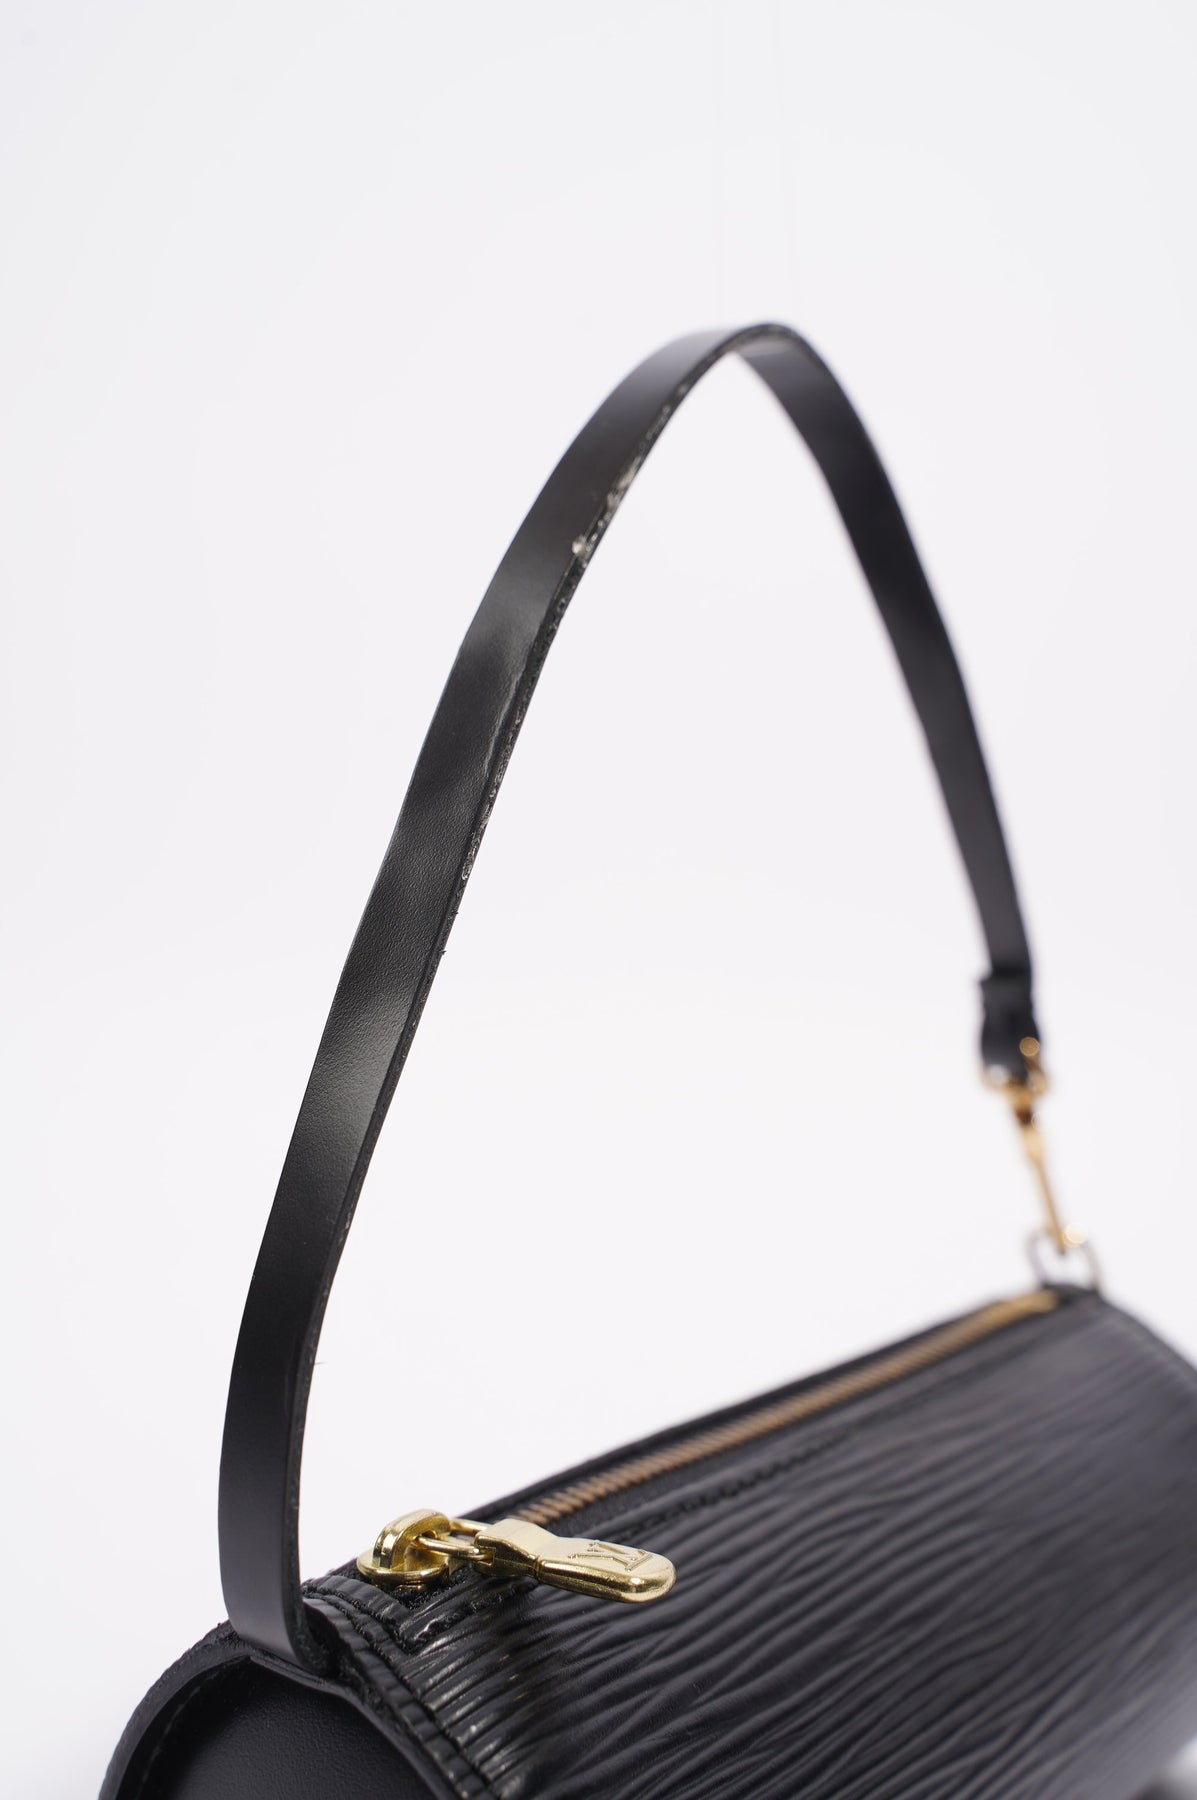 Louis Vuitton Black Epi Leather Mini Papillon Pochette Bag with